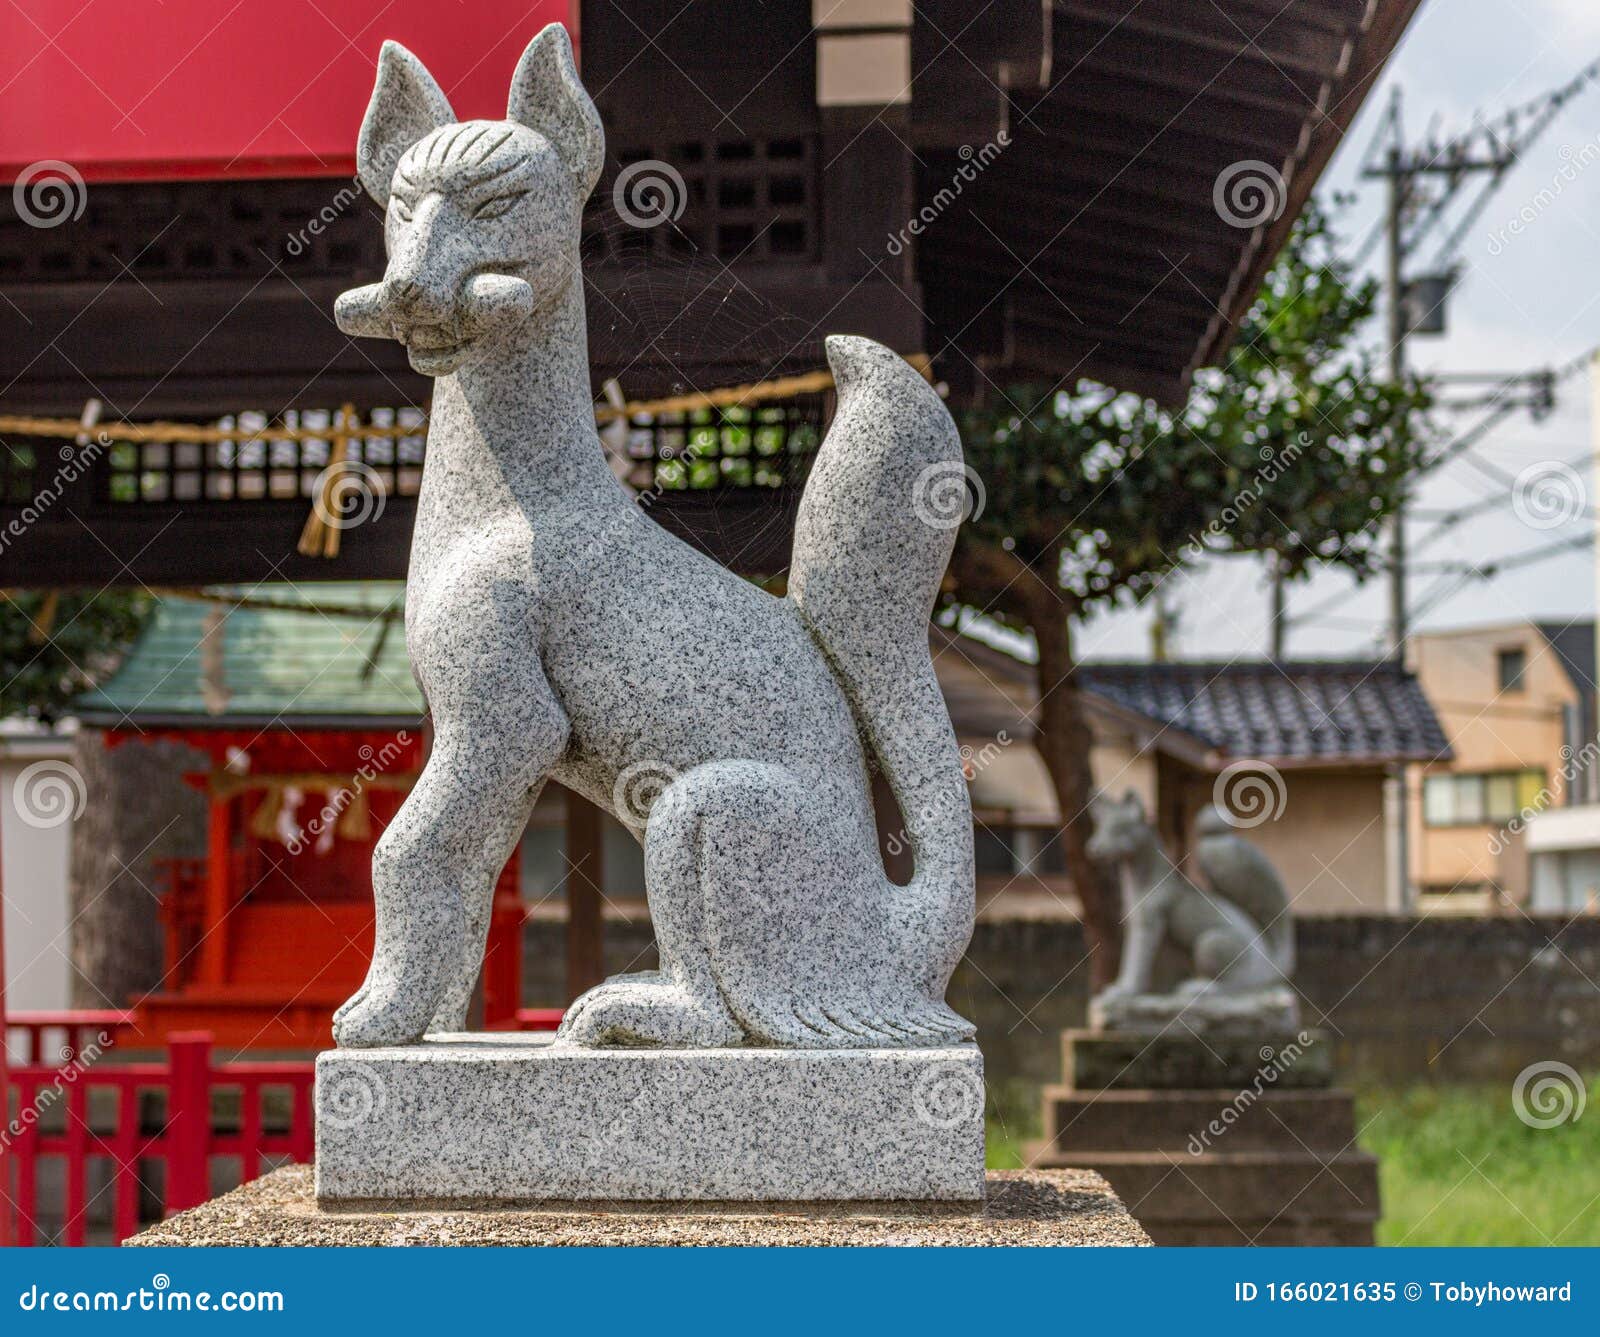 stone statue of fox, or kitsune, at nomachiinari shinto shrine in kanazawa, japan.